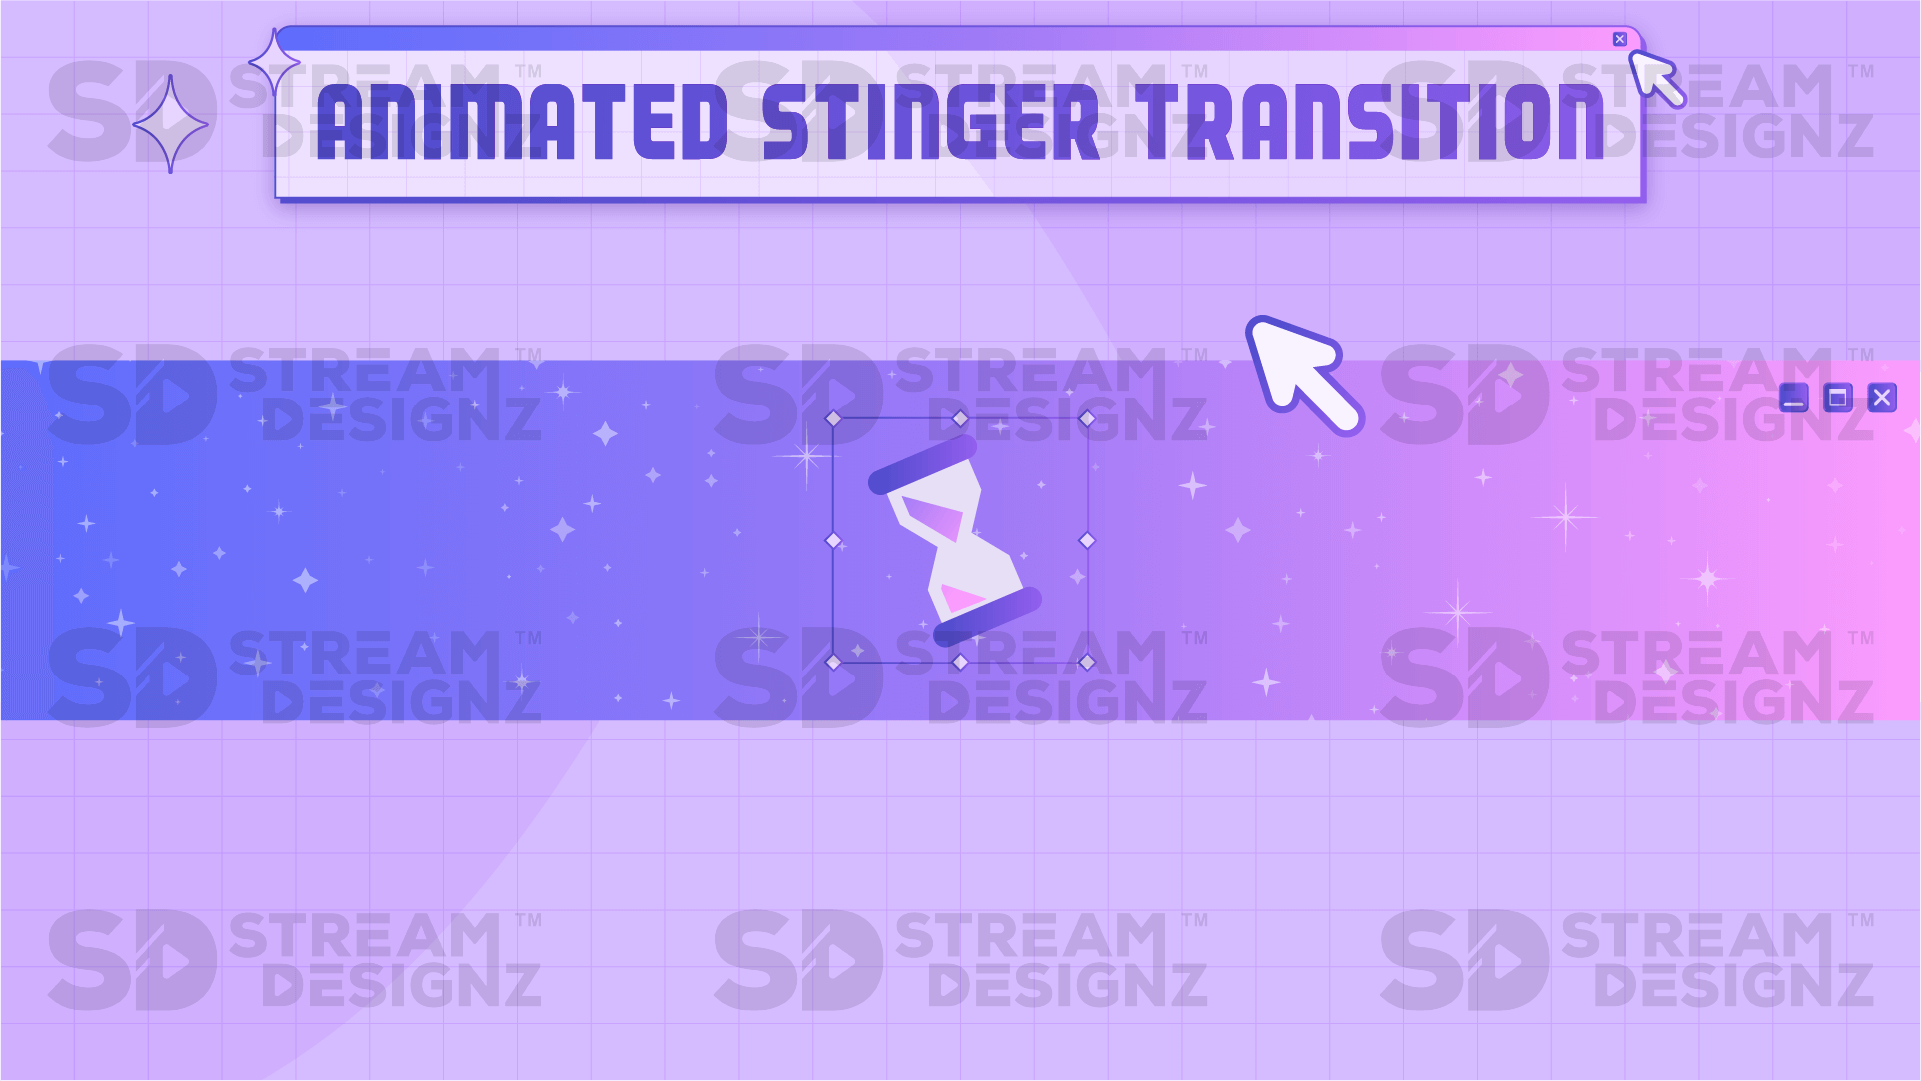 Ultimate stream package stinger transition y2k stream designz